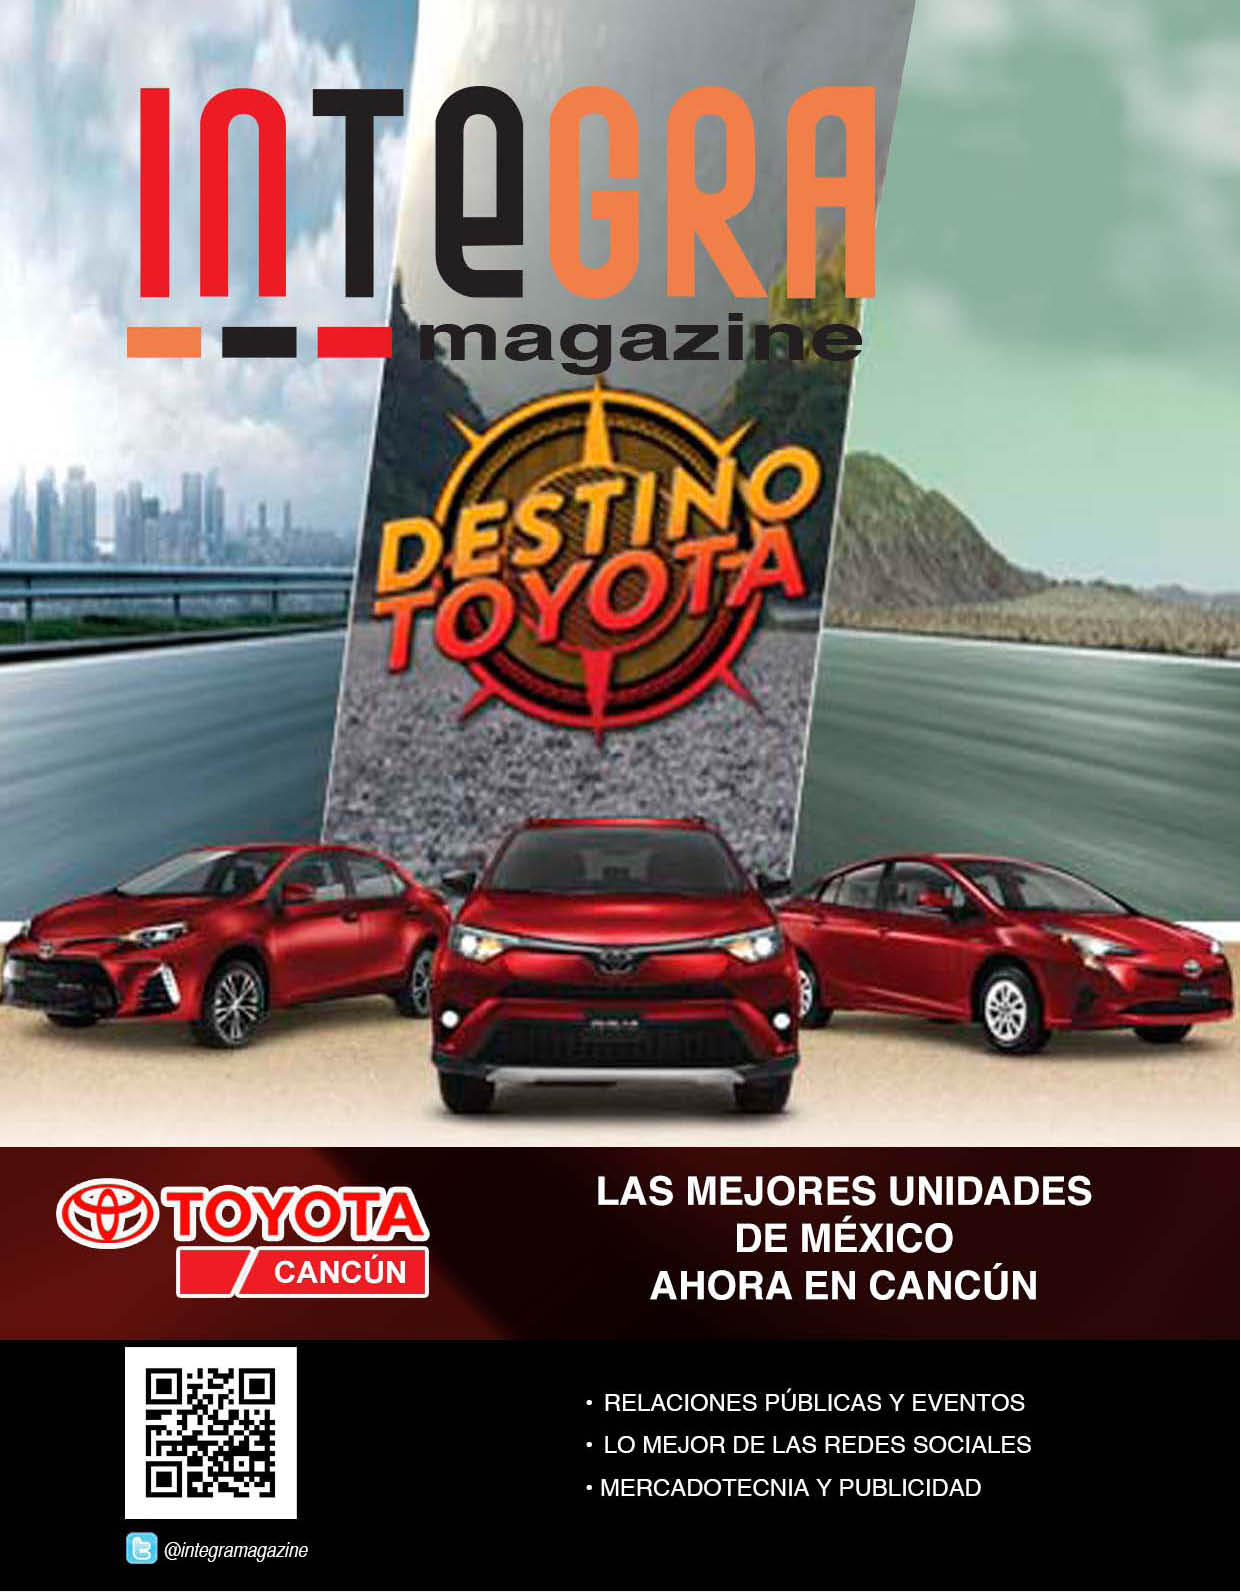 Destino Toyota –  Las mejores unidades de México ahora en Cancún